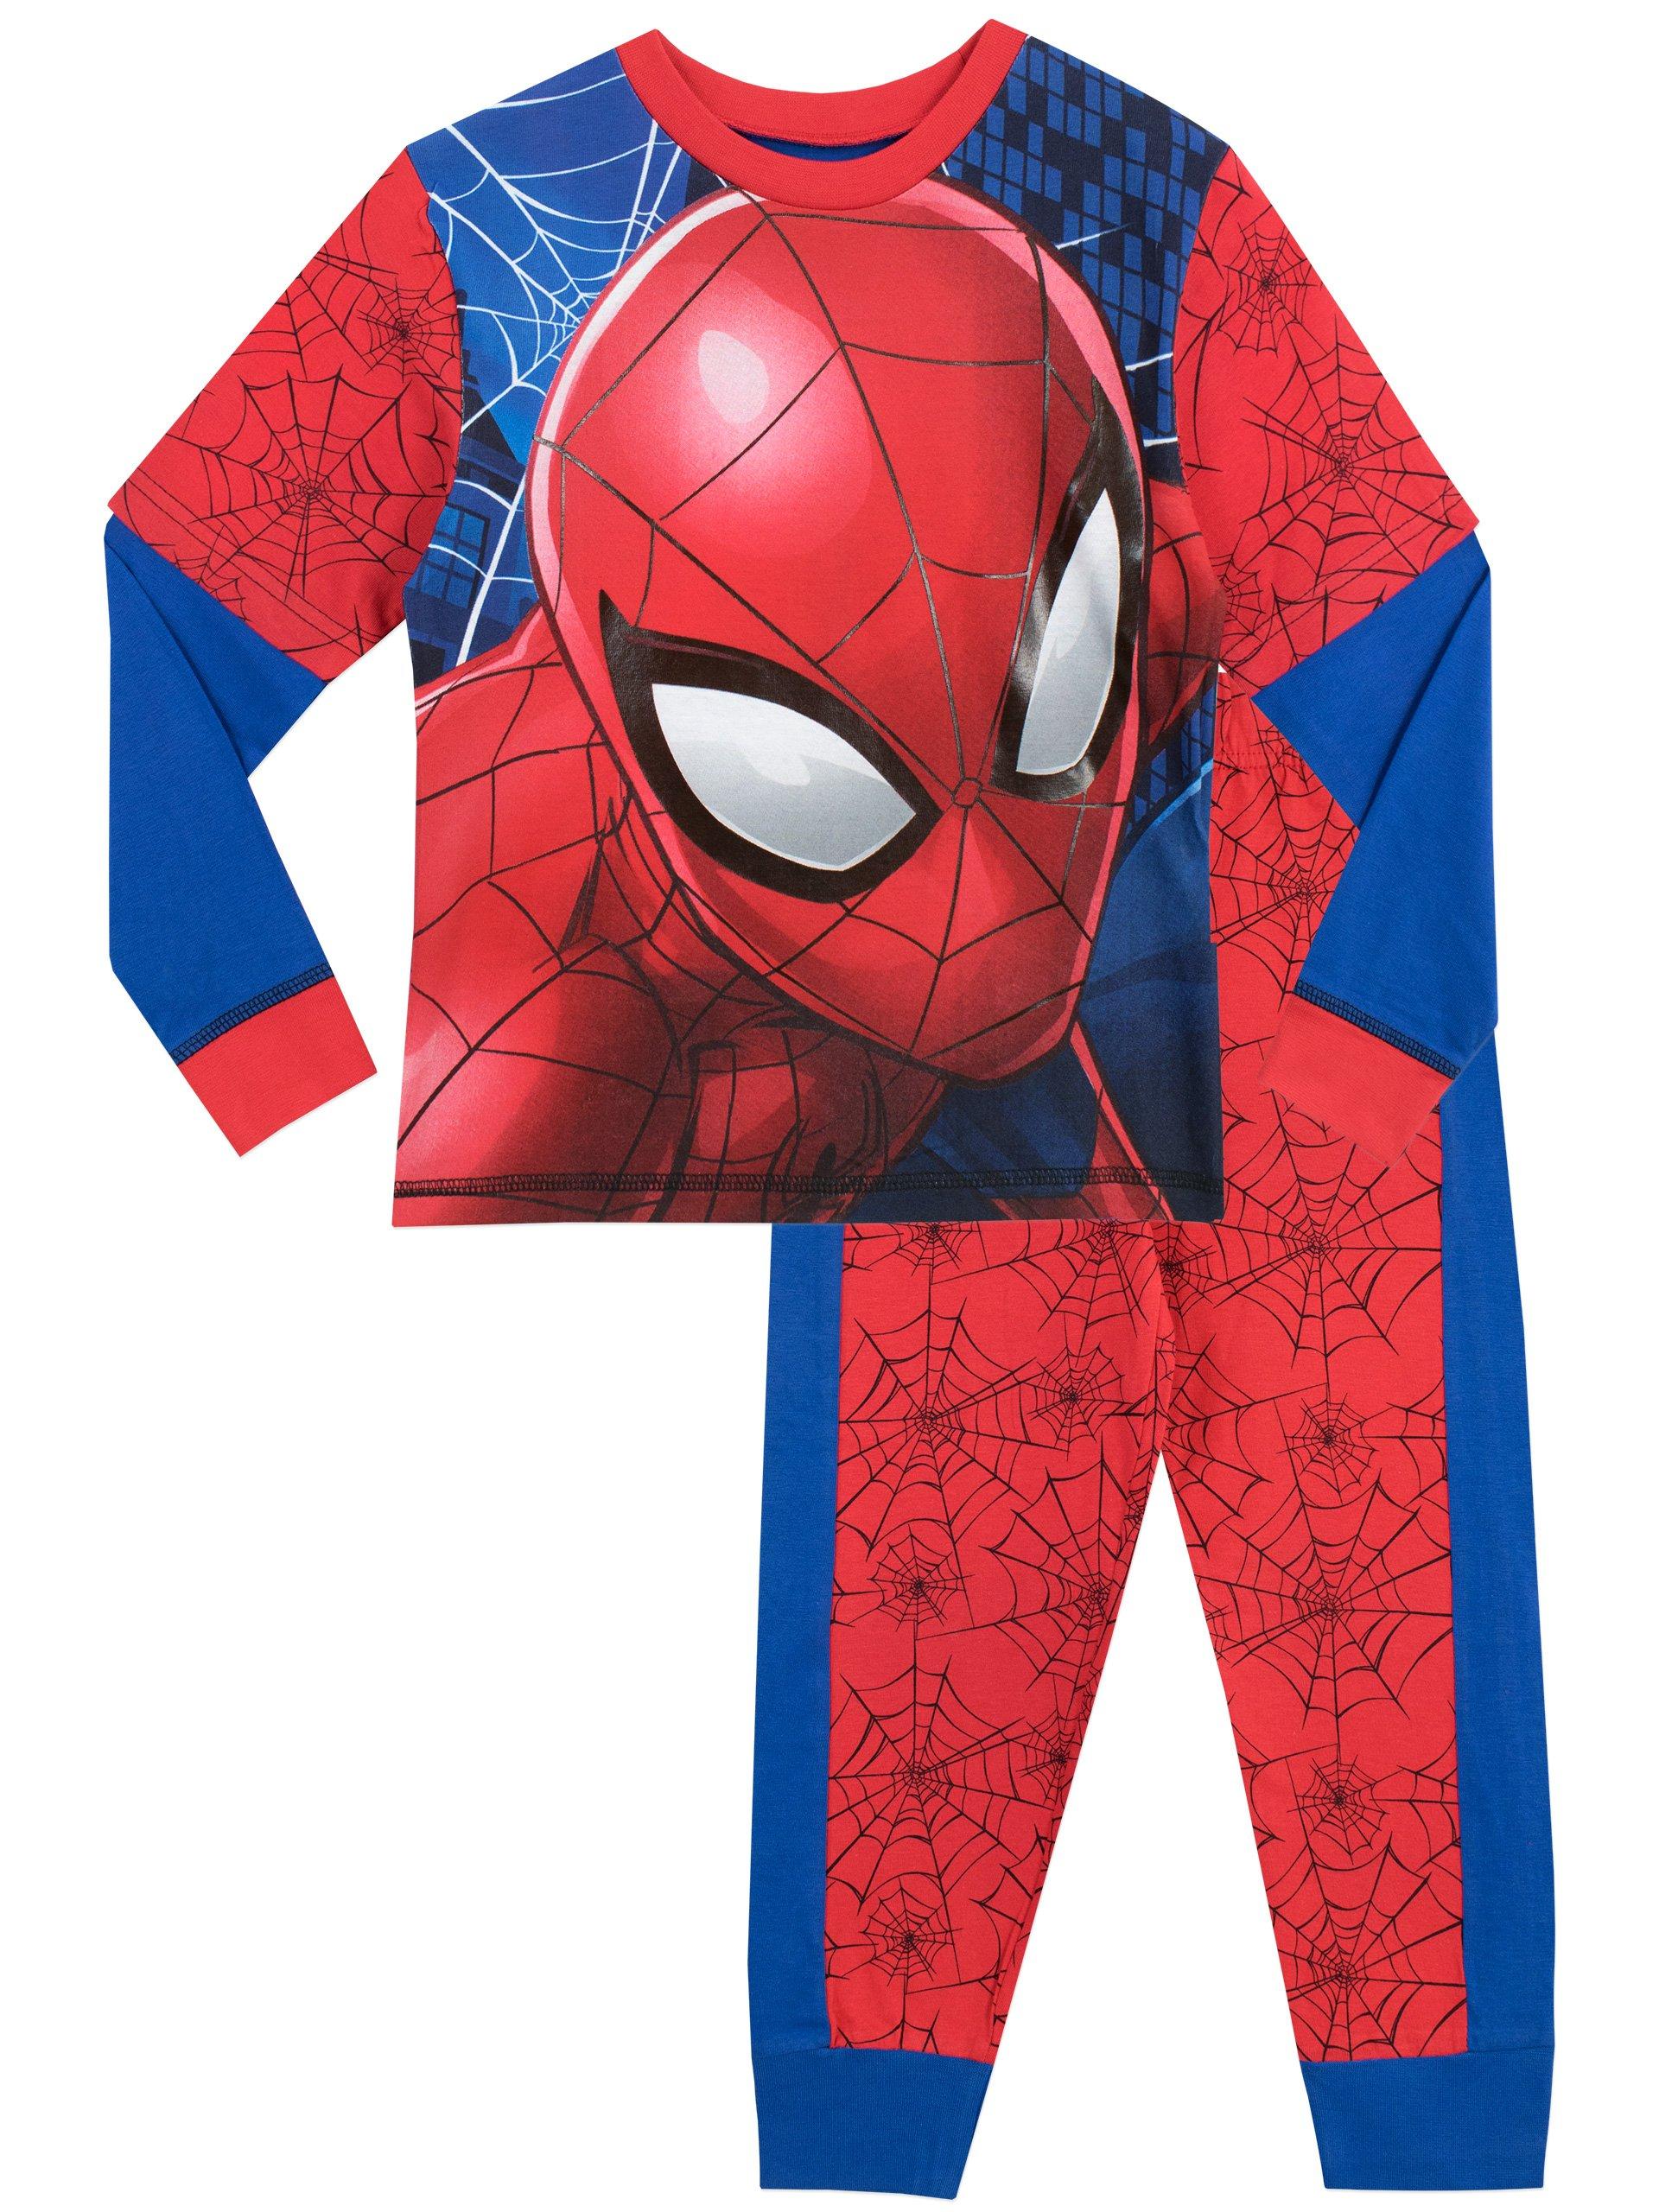 Пижама Человека-Паука Marvel, красный